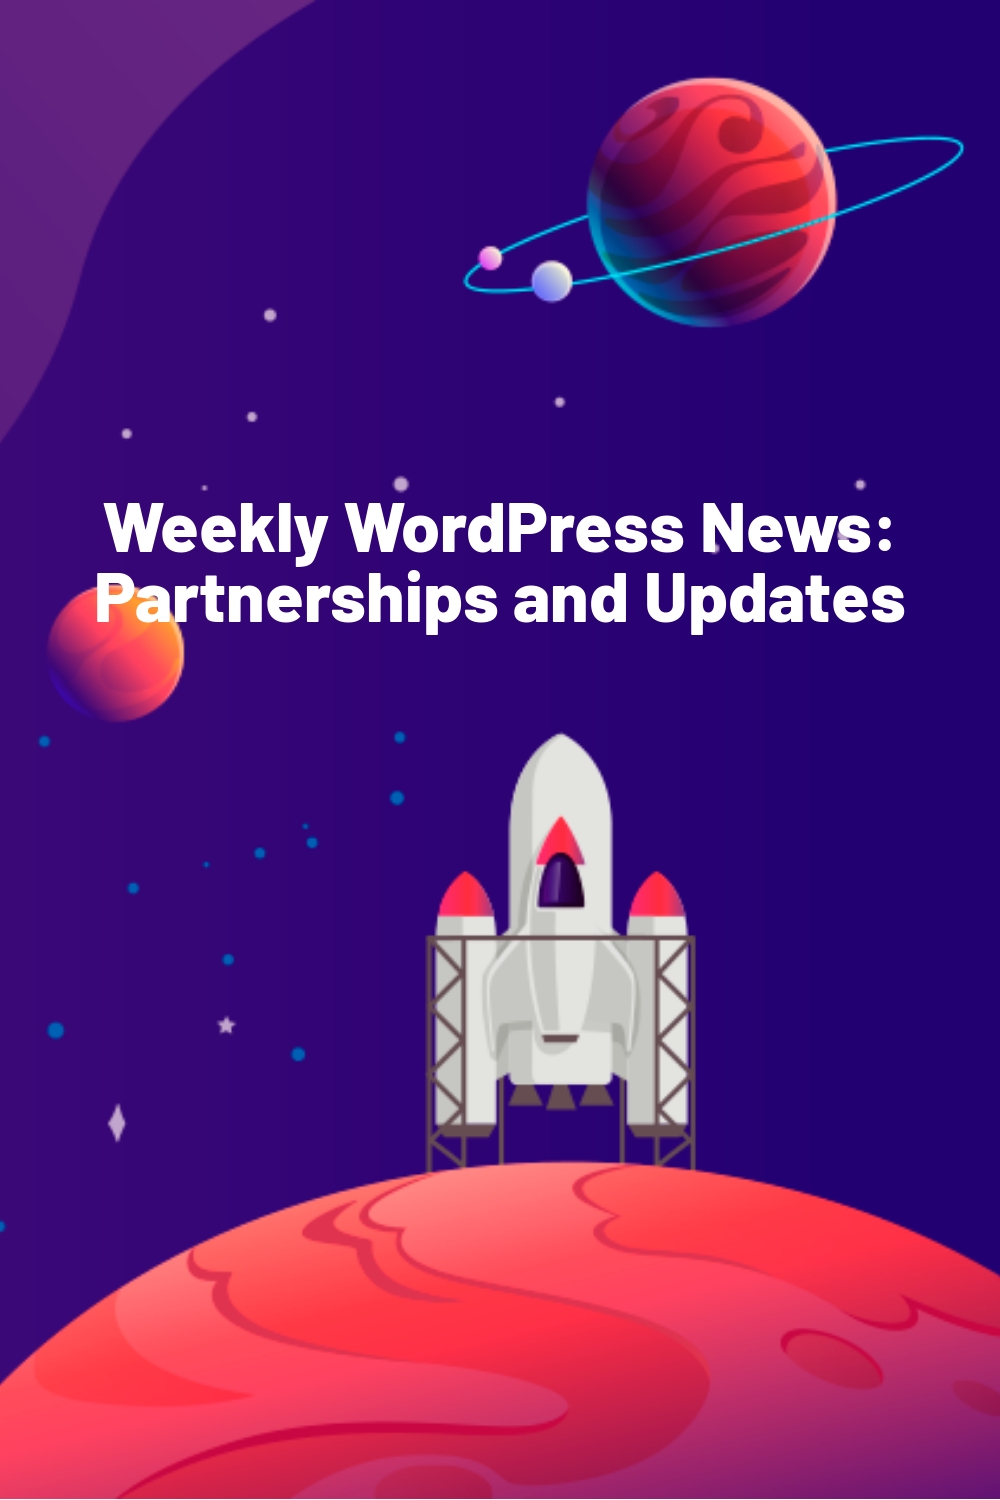 Weekly WordPress News: Partnerships and Updates